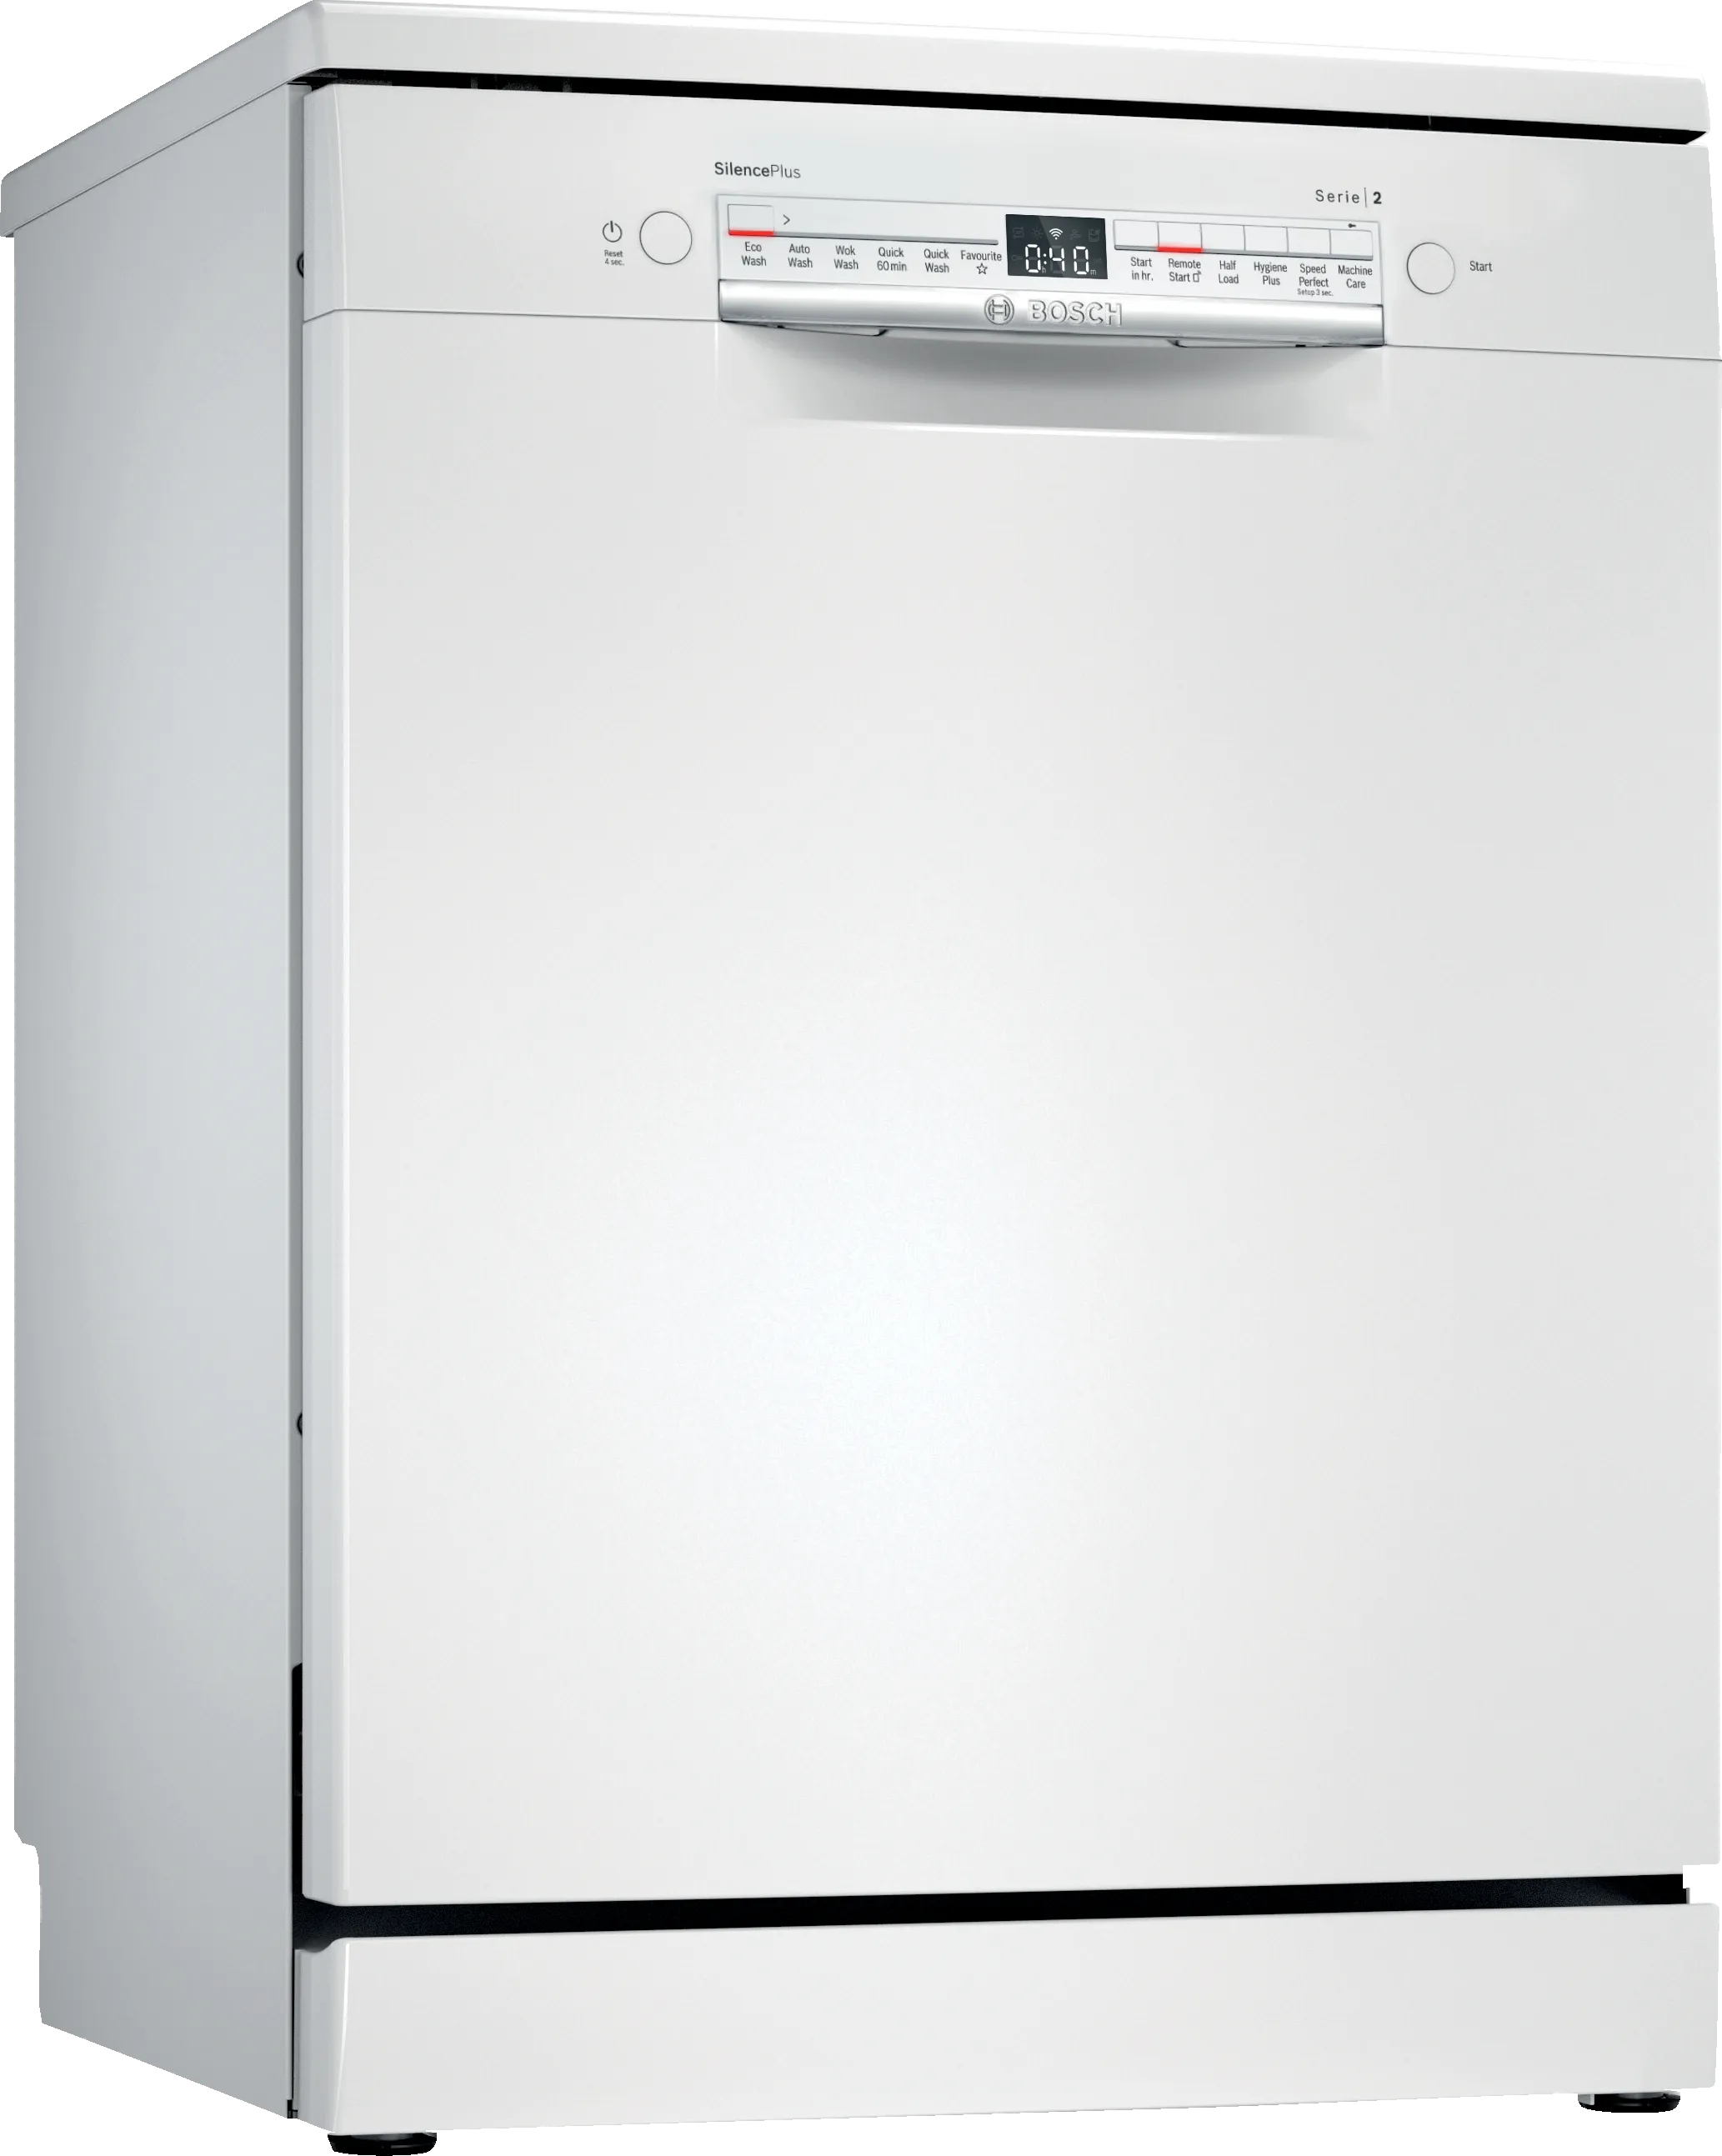 Series 2 Freestanding Dishwasher 60 cm White 